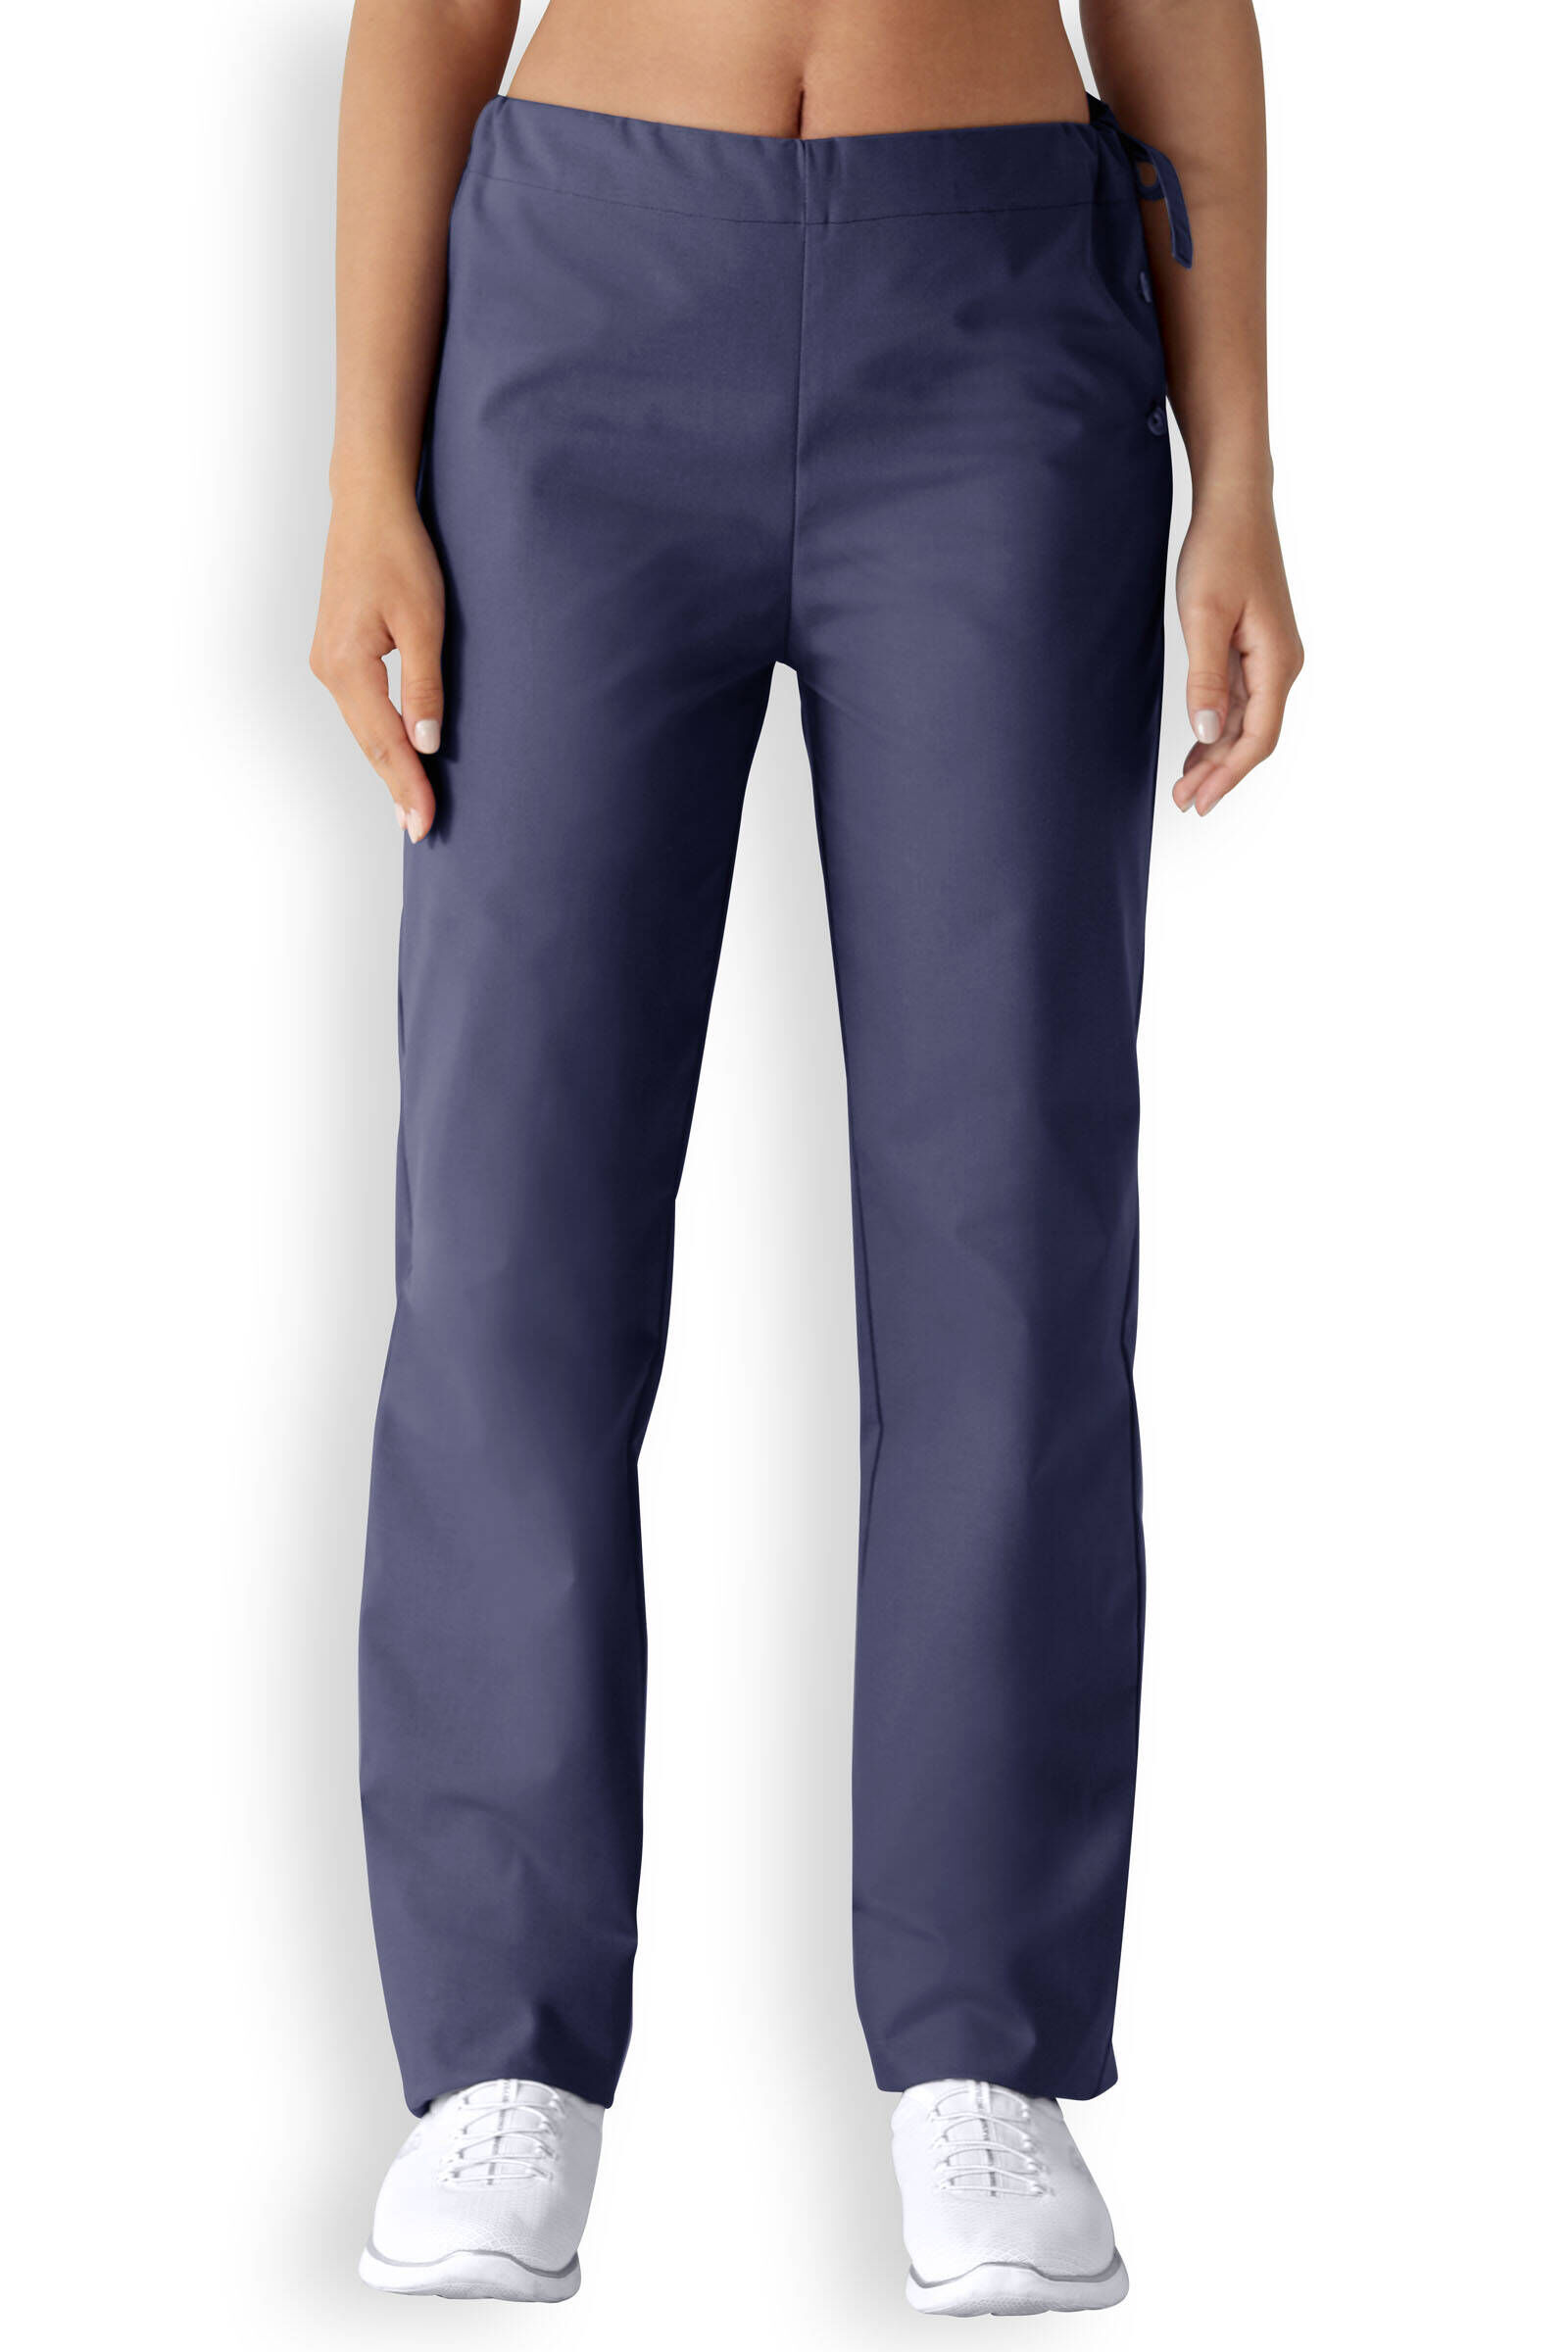 CLINIC DRESS Pantalon médical mixte Taille S light navy  - Rouge régence - Size: 4XL - unisex